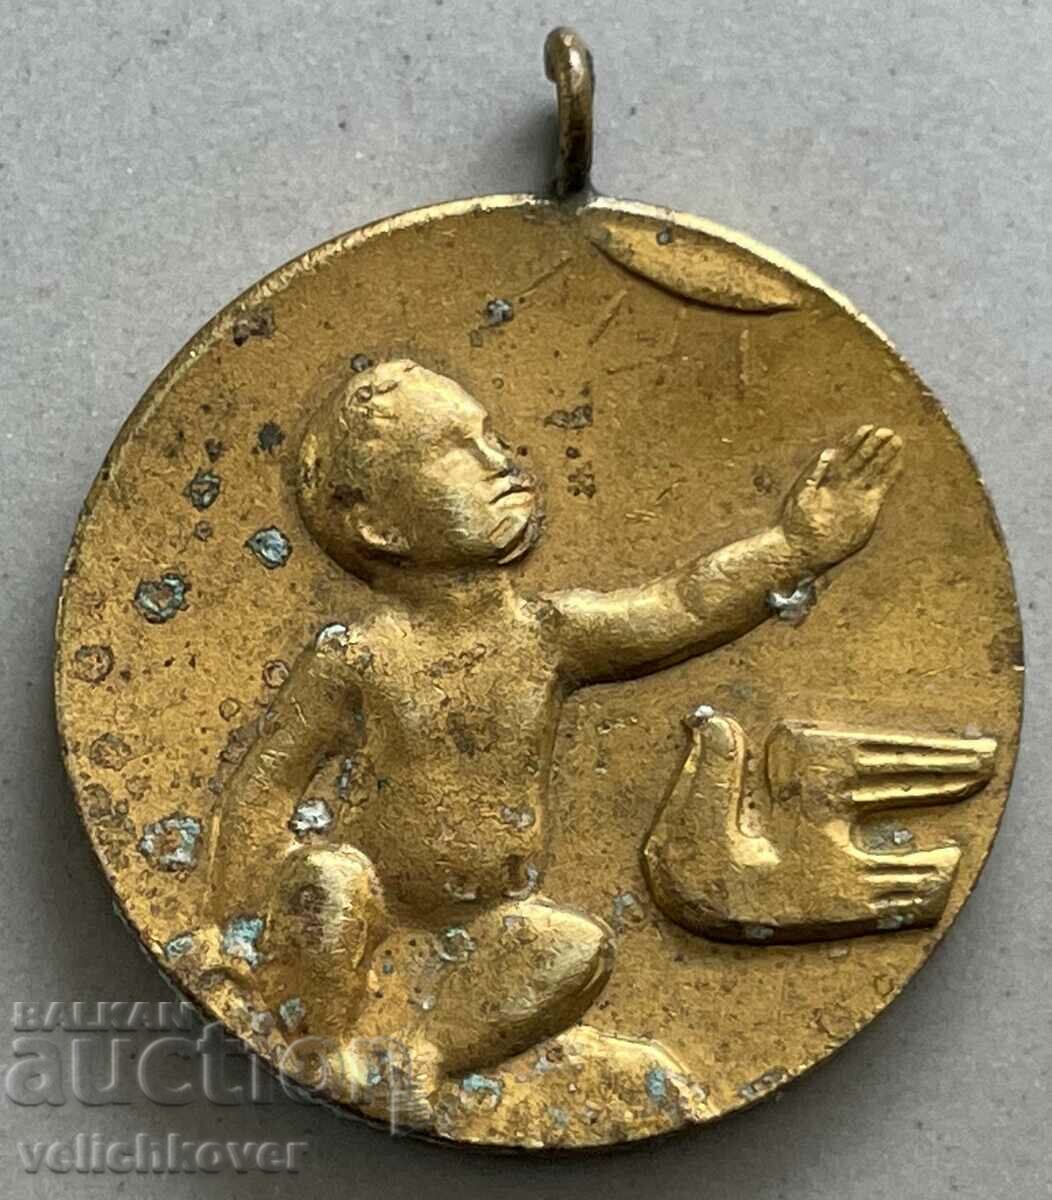 34422 Bulgaria medal given to children born in Byala Slatina